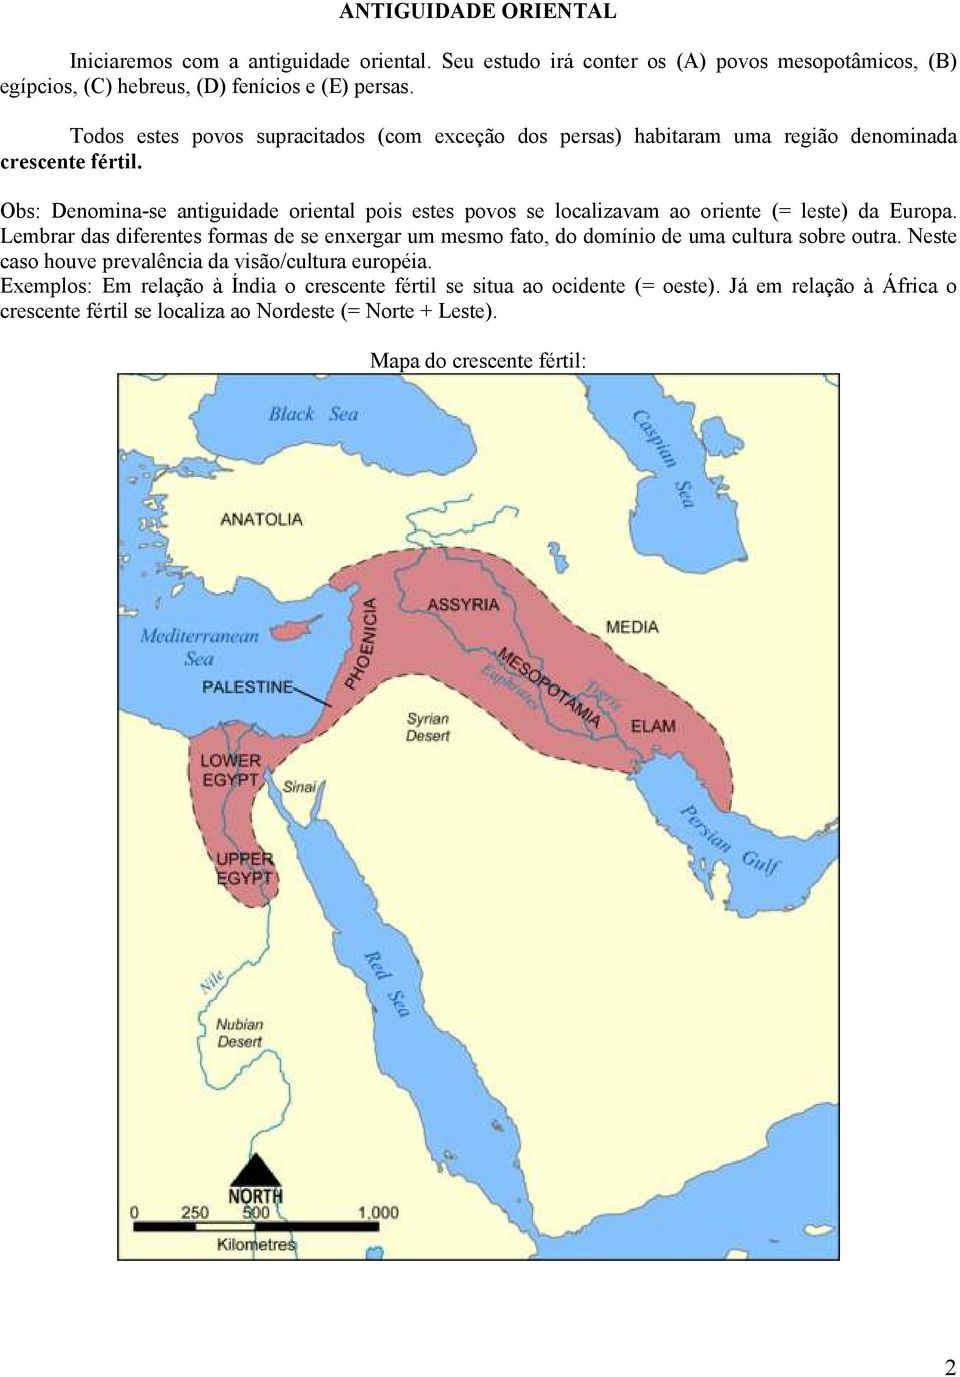 Obs: Denomina-se antiguidade oriental pois estes povos se localizavam ao oriente (= leste) da Europa.